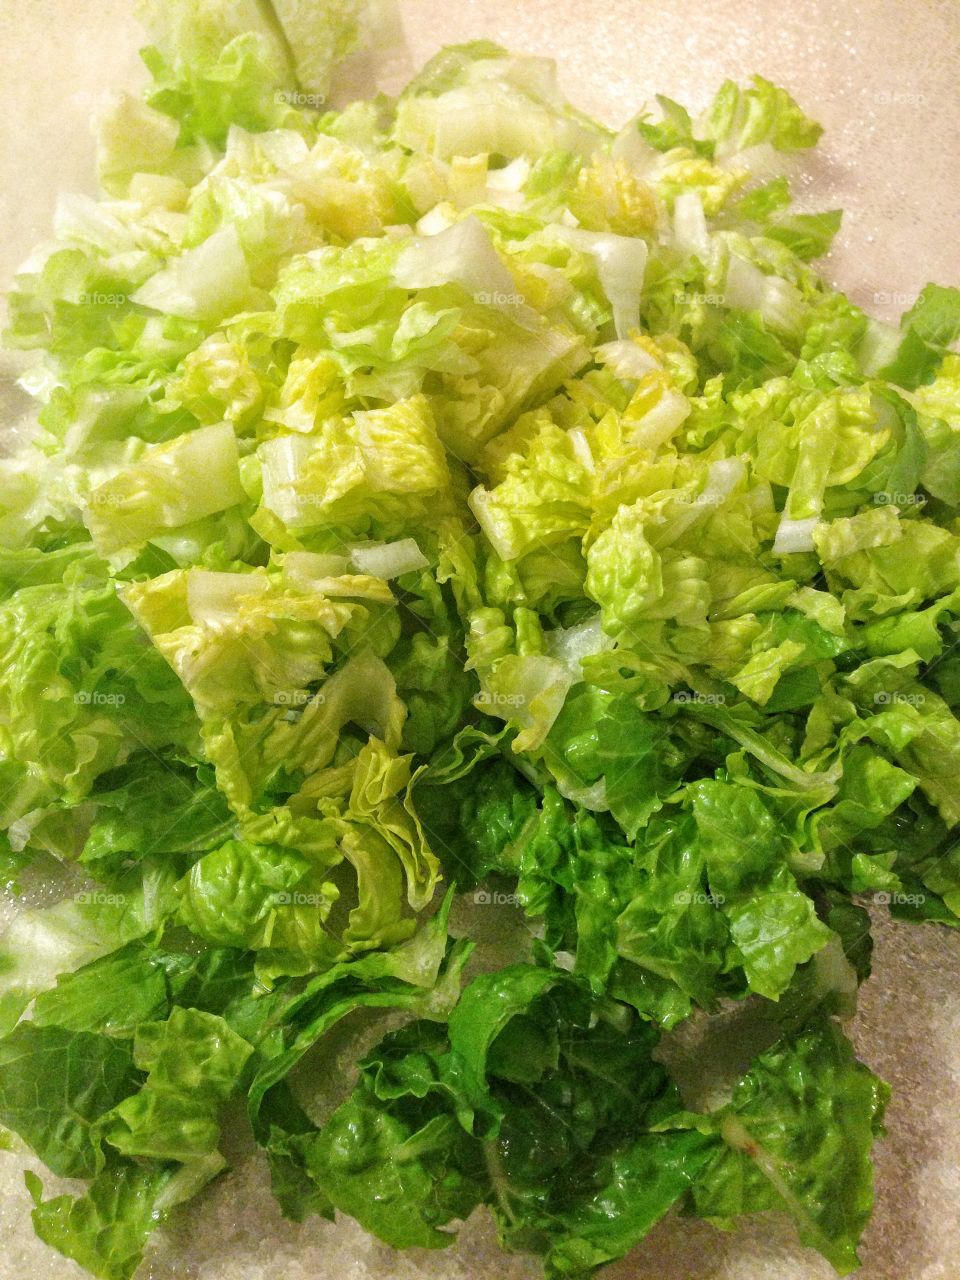 Chopped lettuce. Chopped lettuce